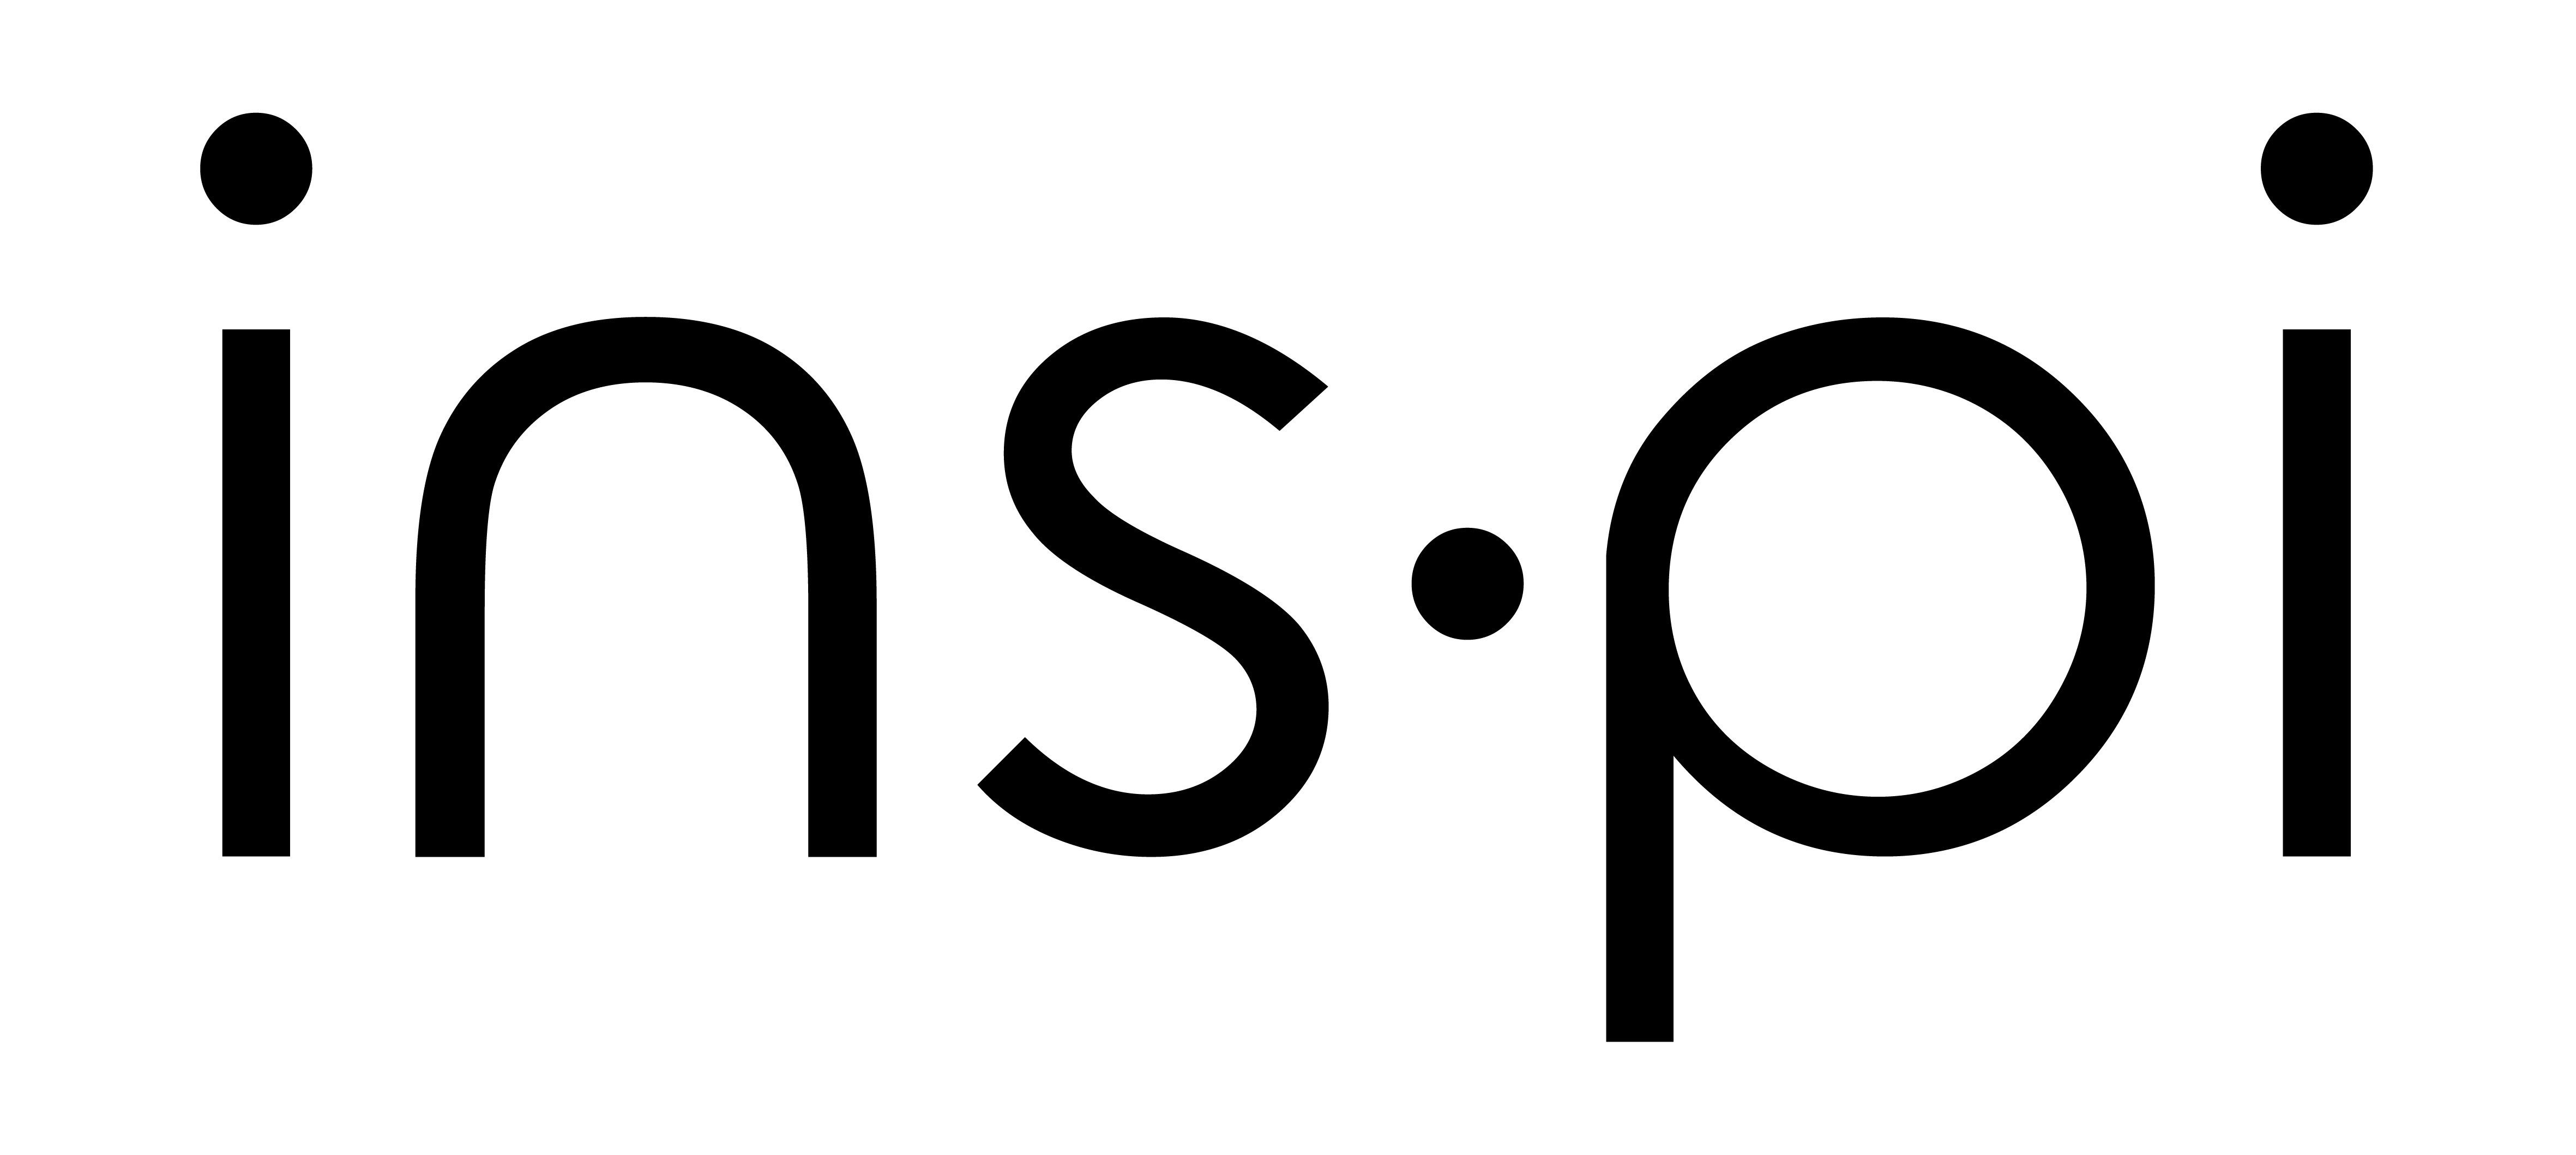 ins-pi logo_black